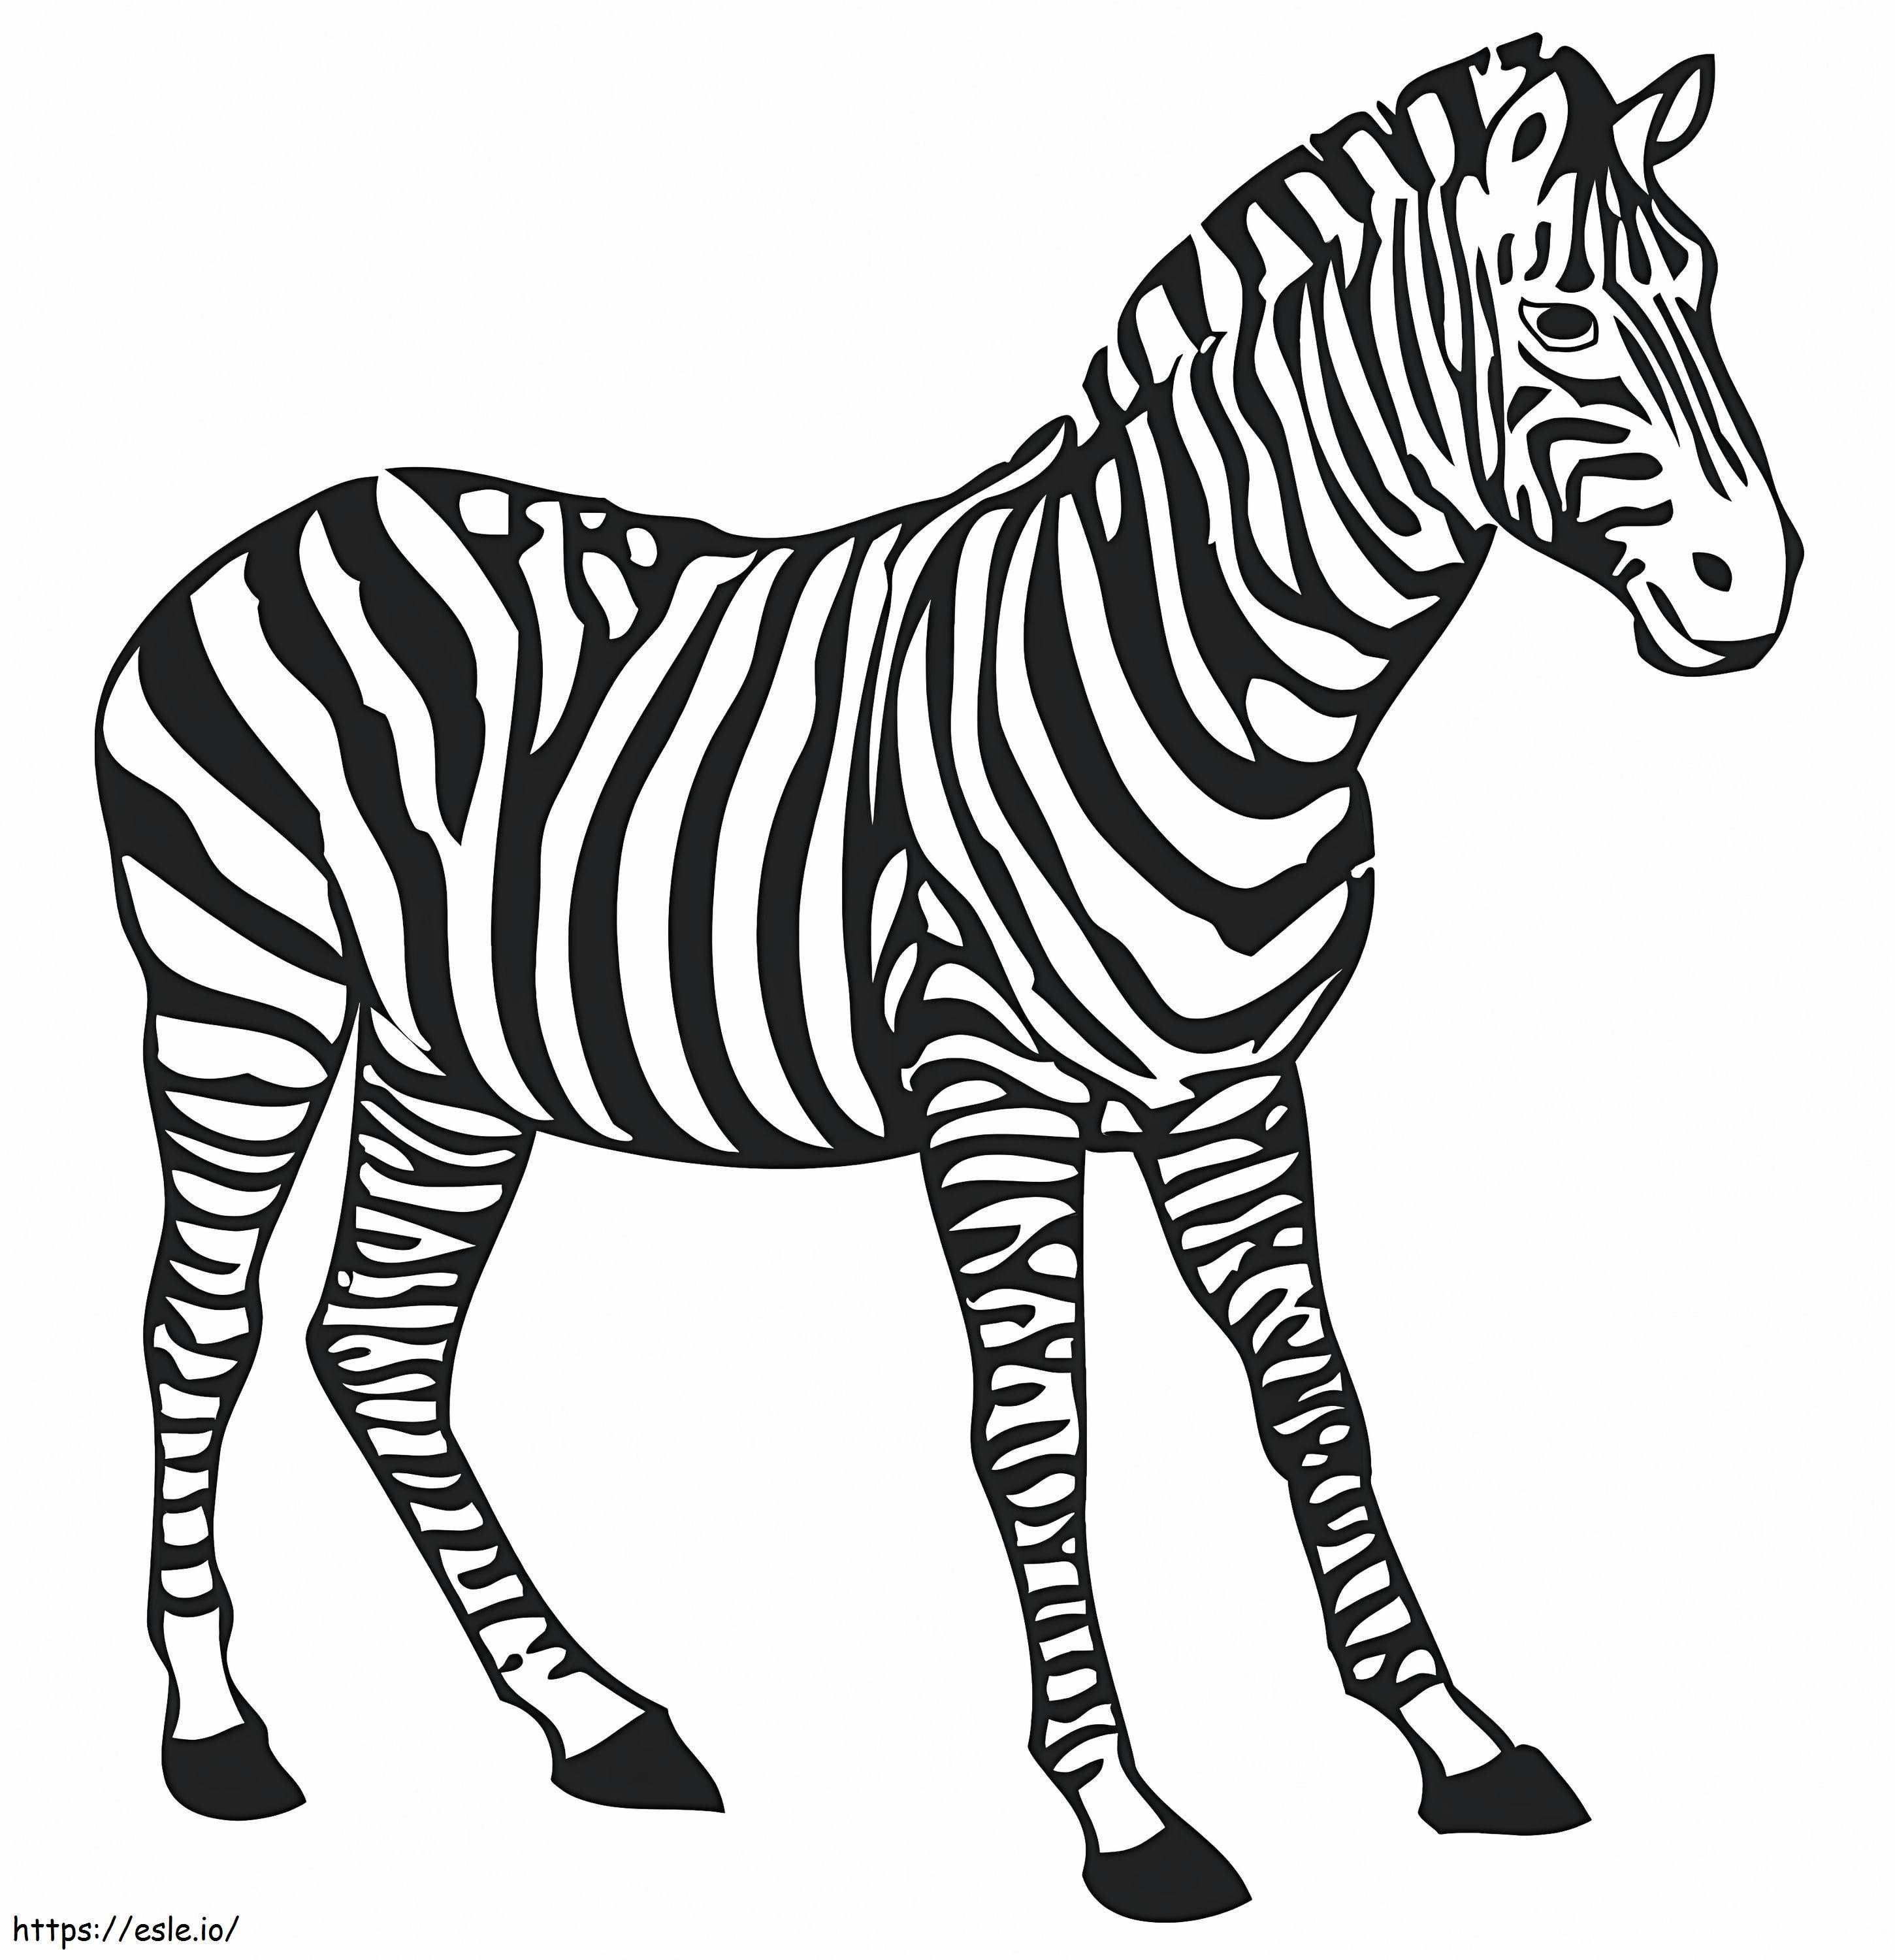 Basic Zebra coloring page